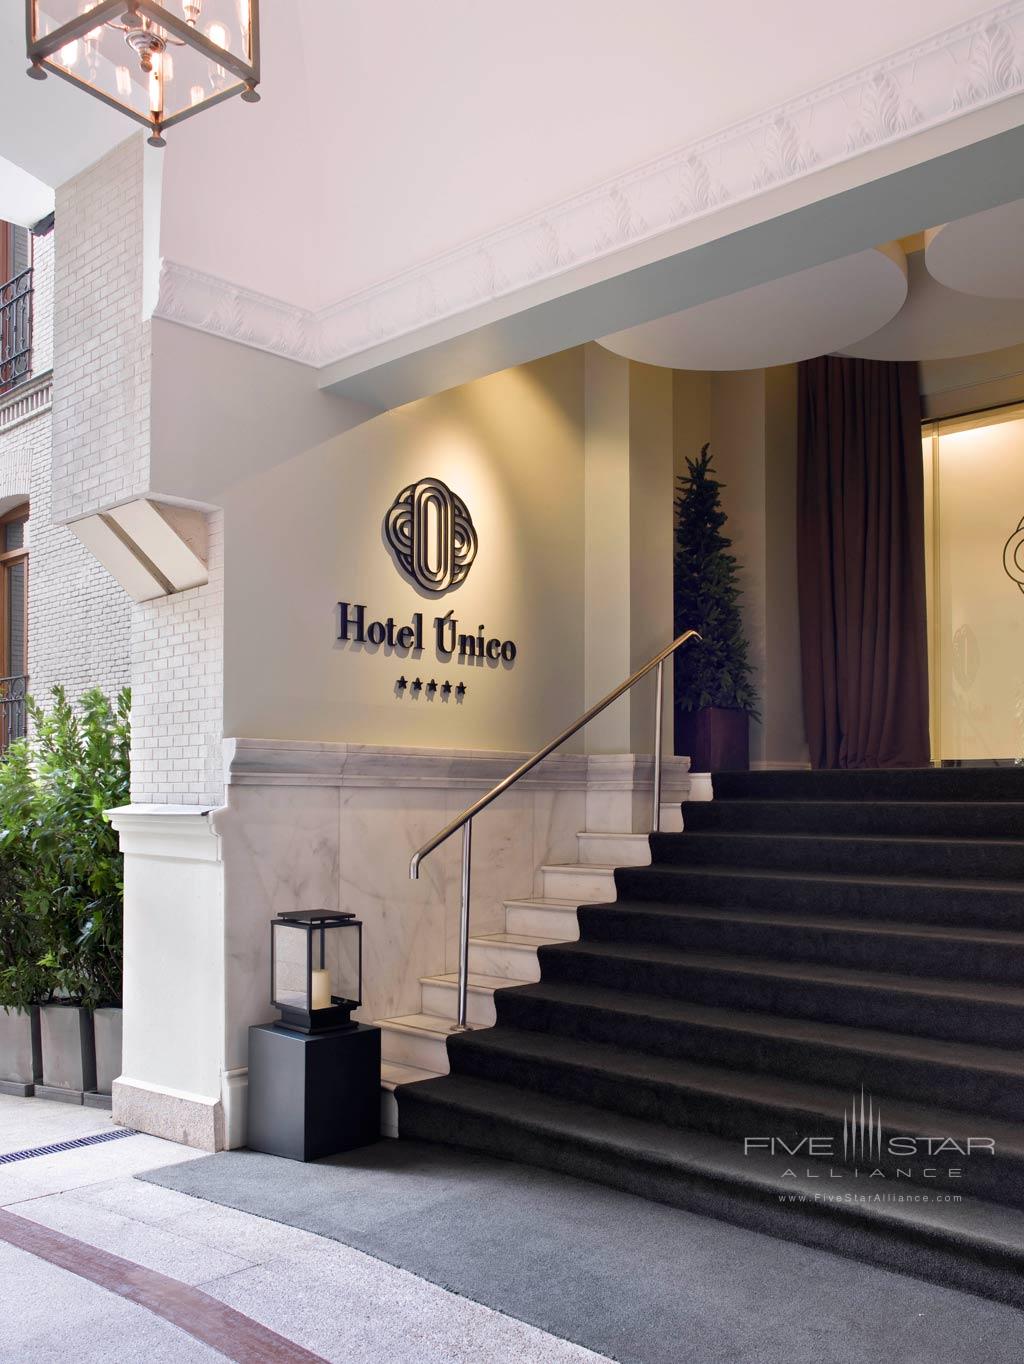 Hotel Unico Madrid, Spain